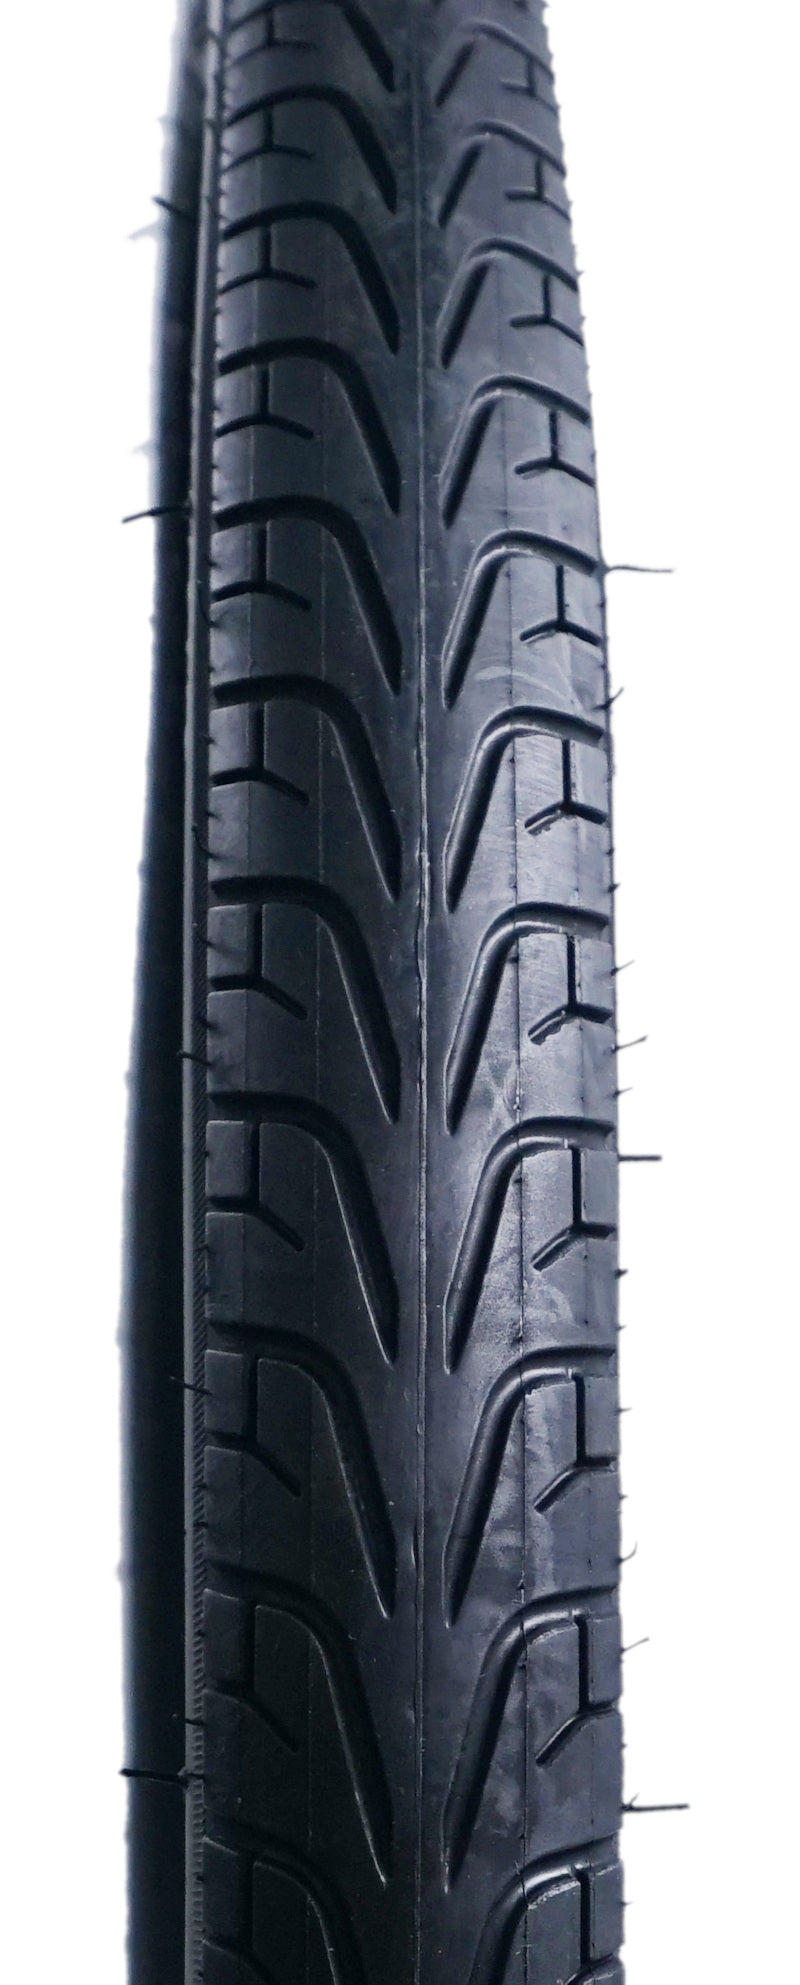 Vittoria Randonneur 700c Performance Road Tire with Reflective Strip - The Bikesmiths